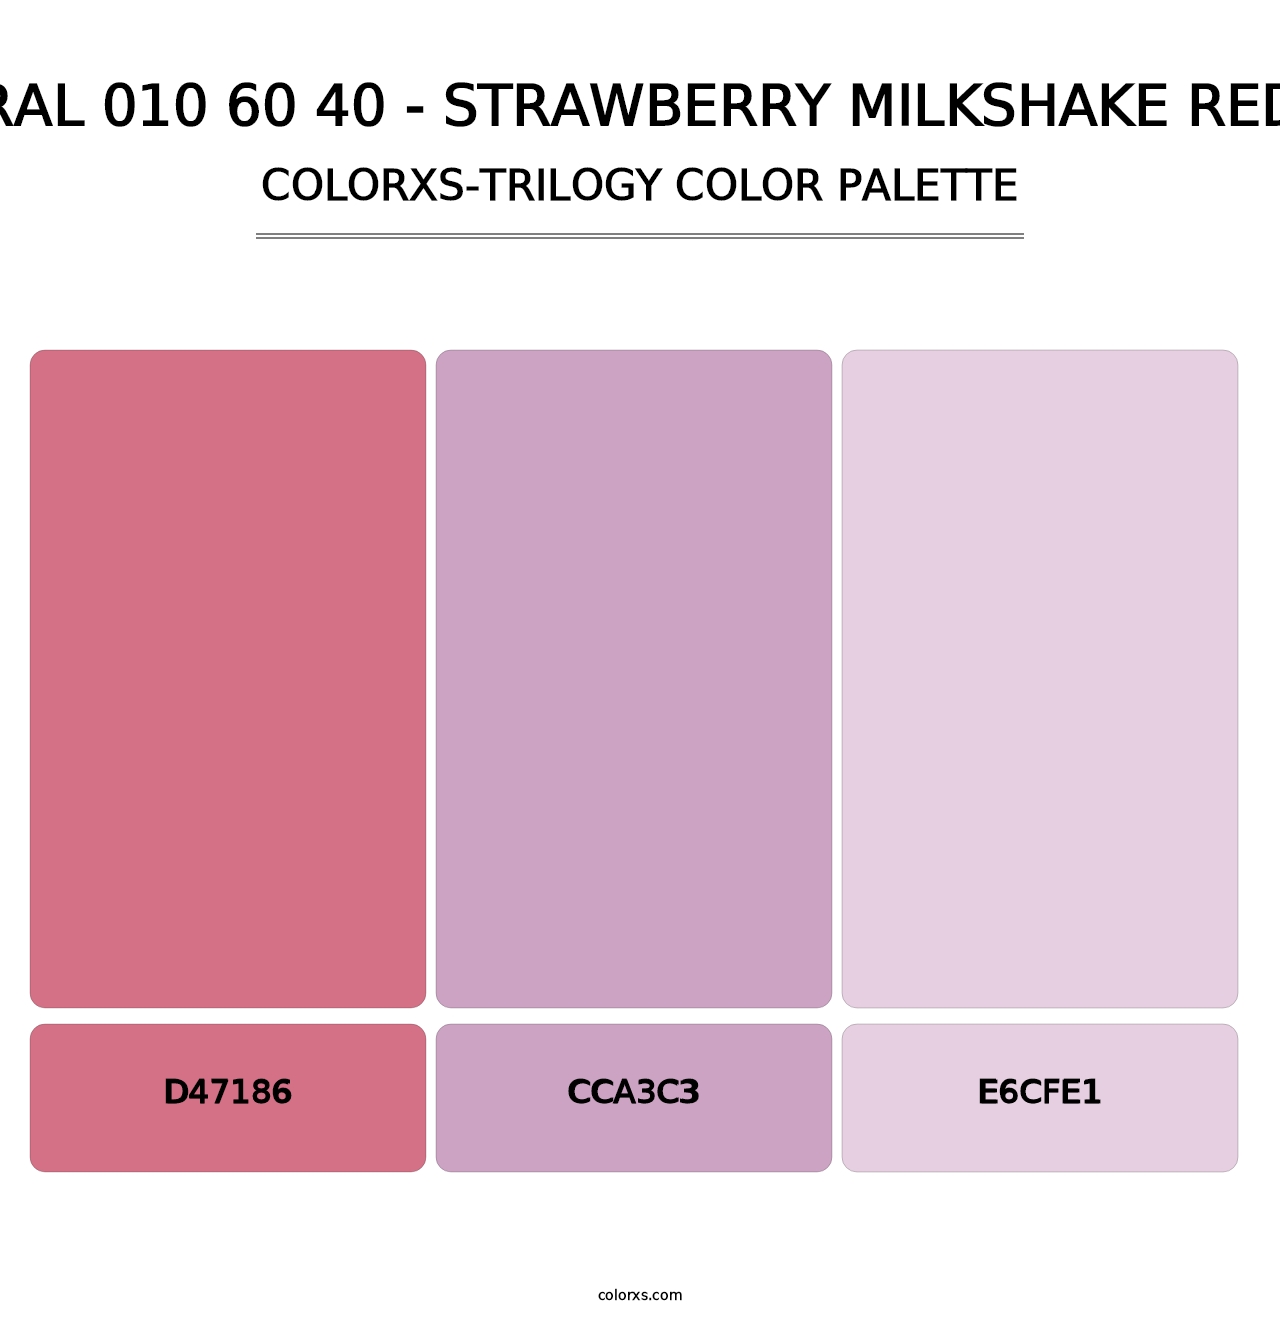 RAL 010 60 40 - Strawberry Milkshake Red - Colorxs Trilogy Palette